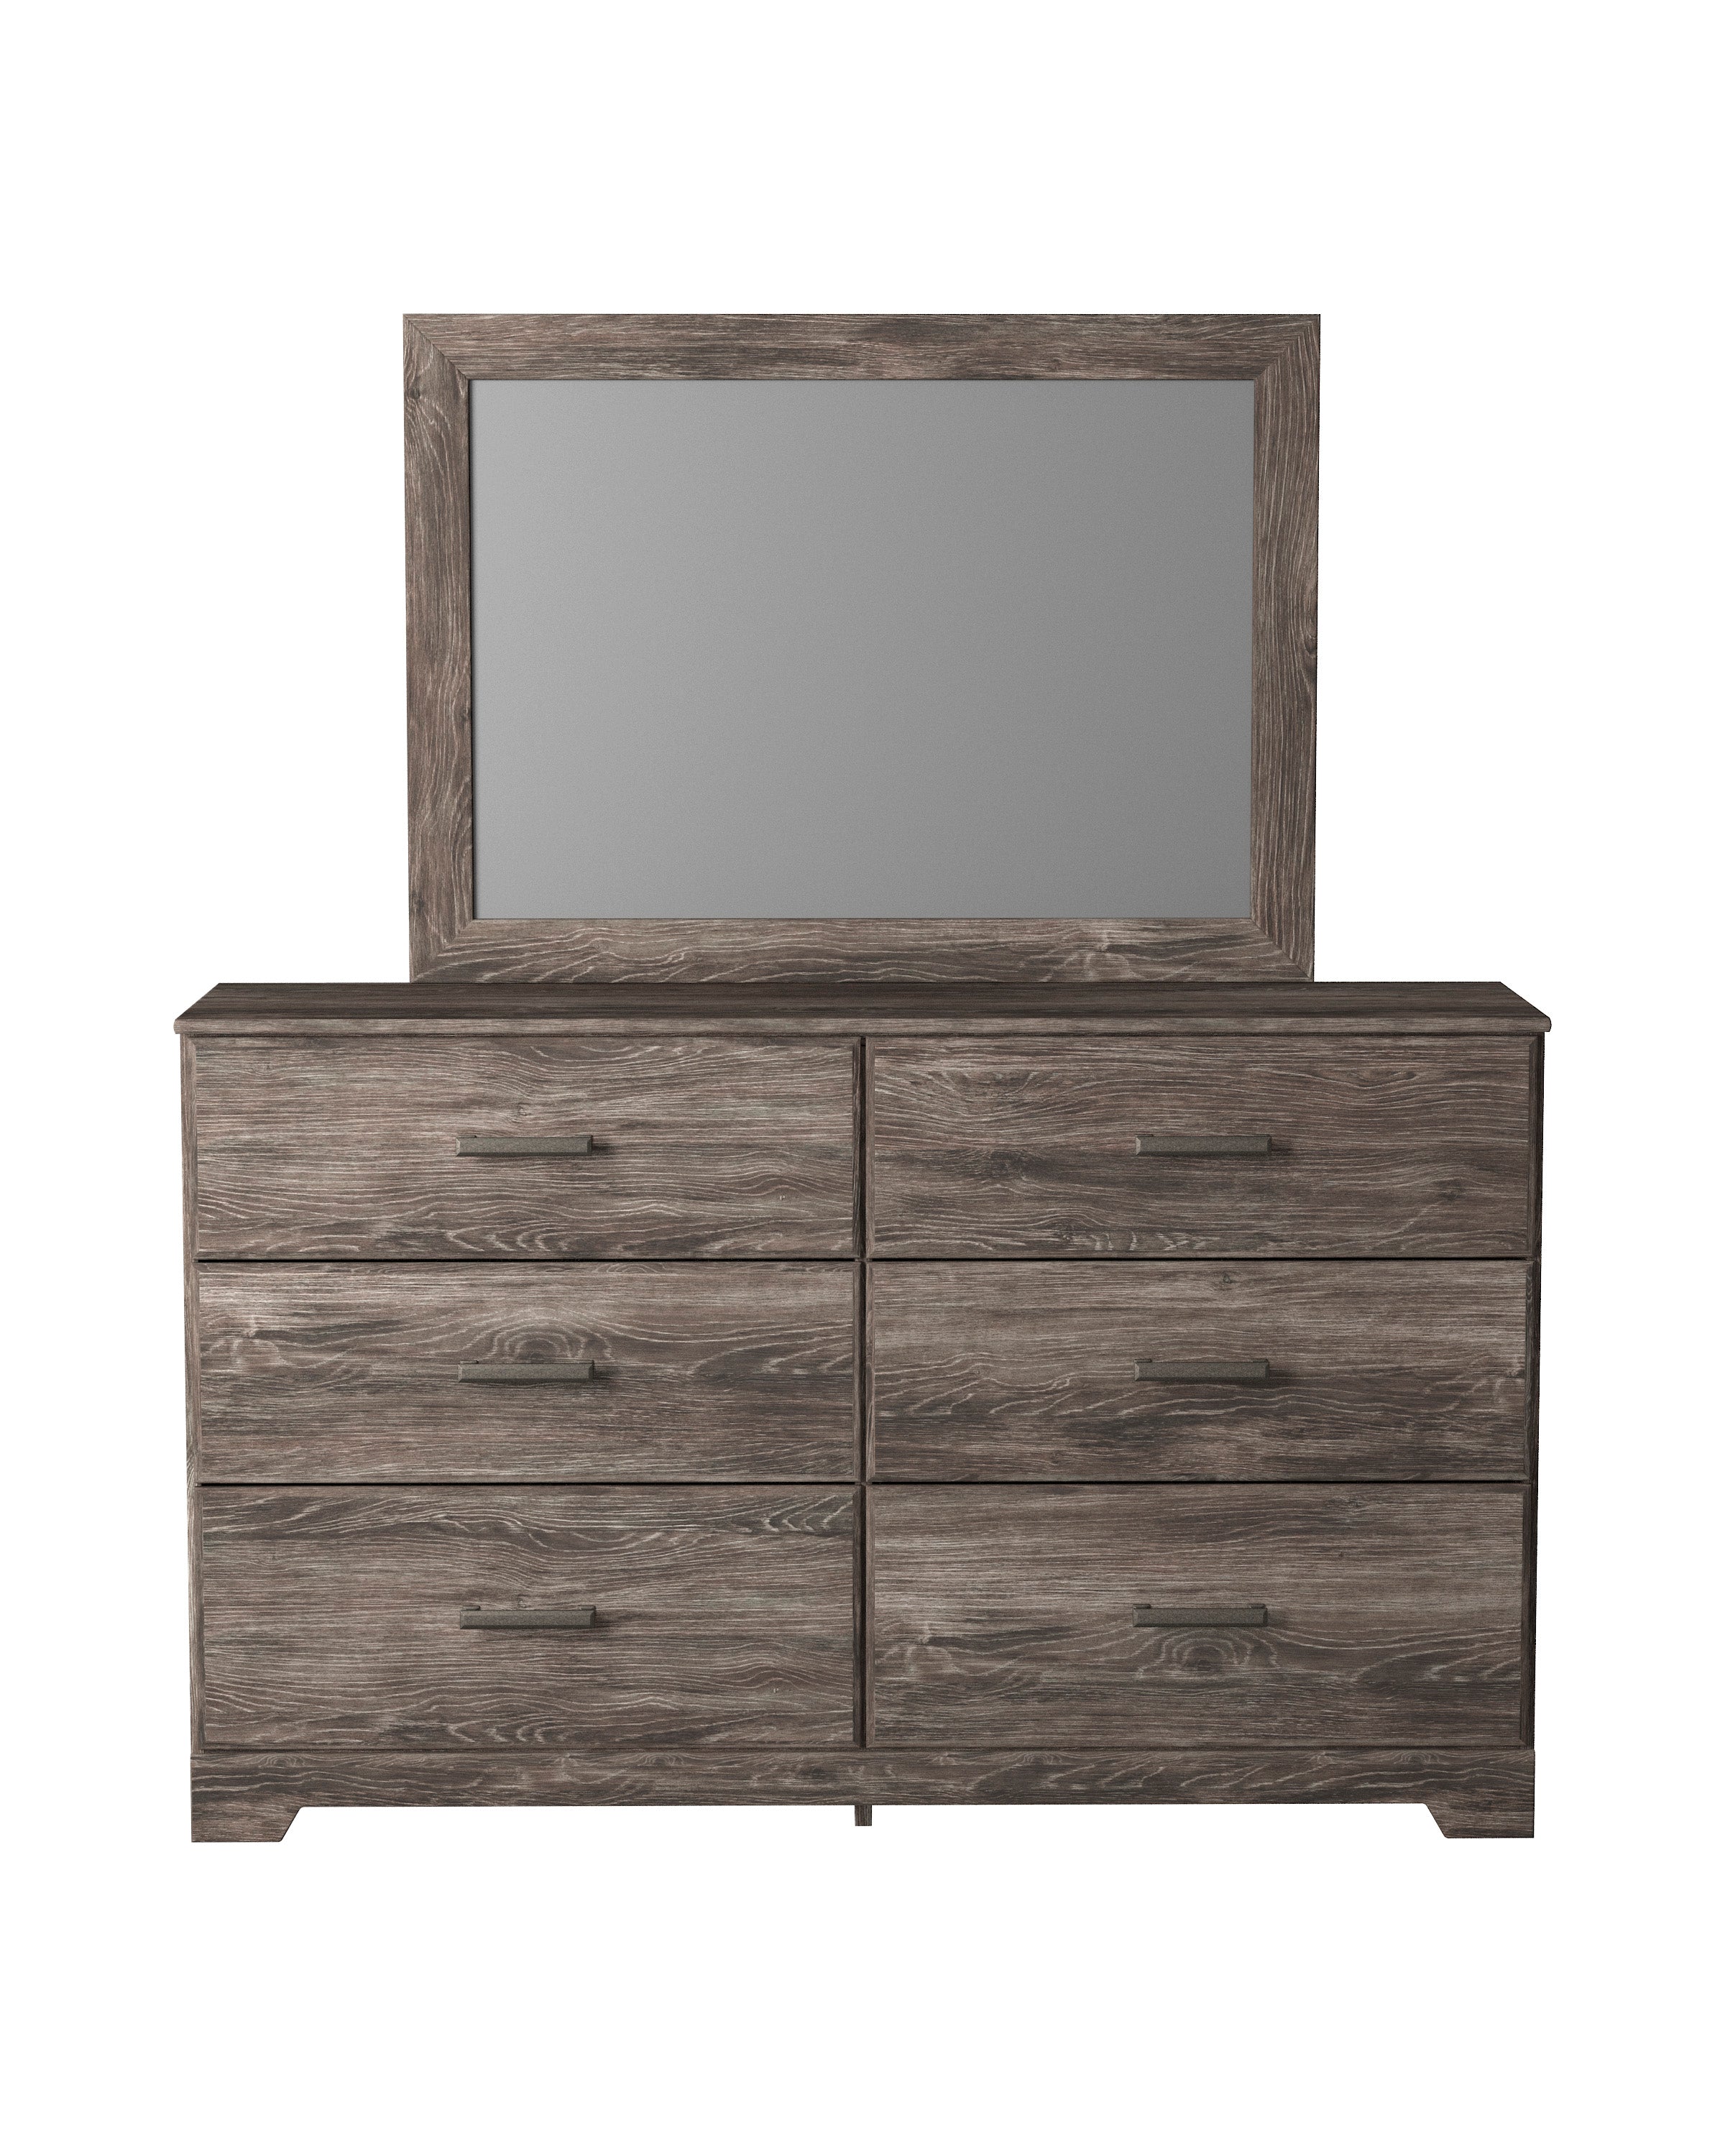 Ralinksi Full Panel Bed with Mirrored Dresser